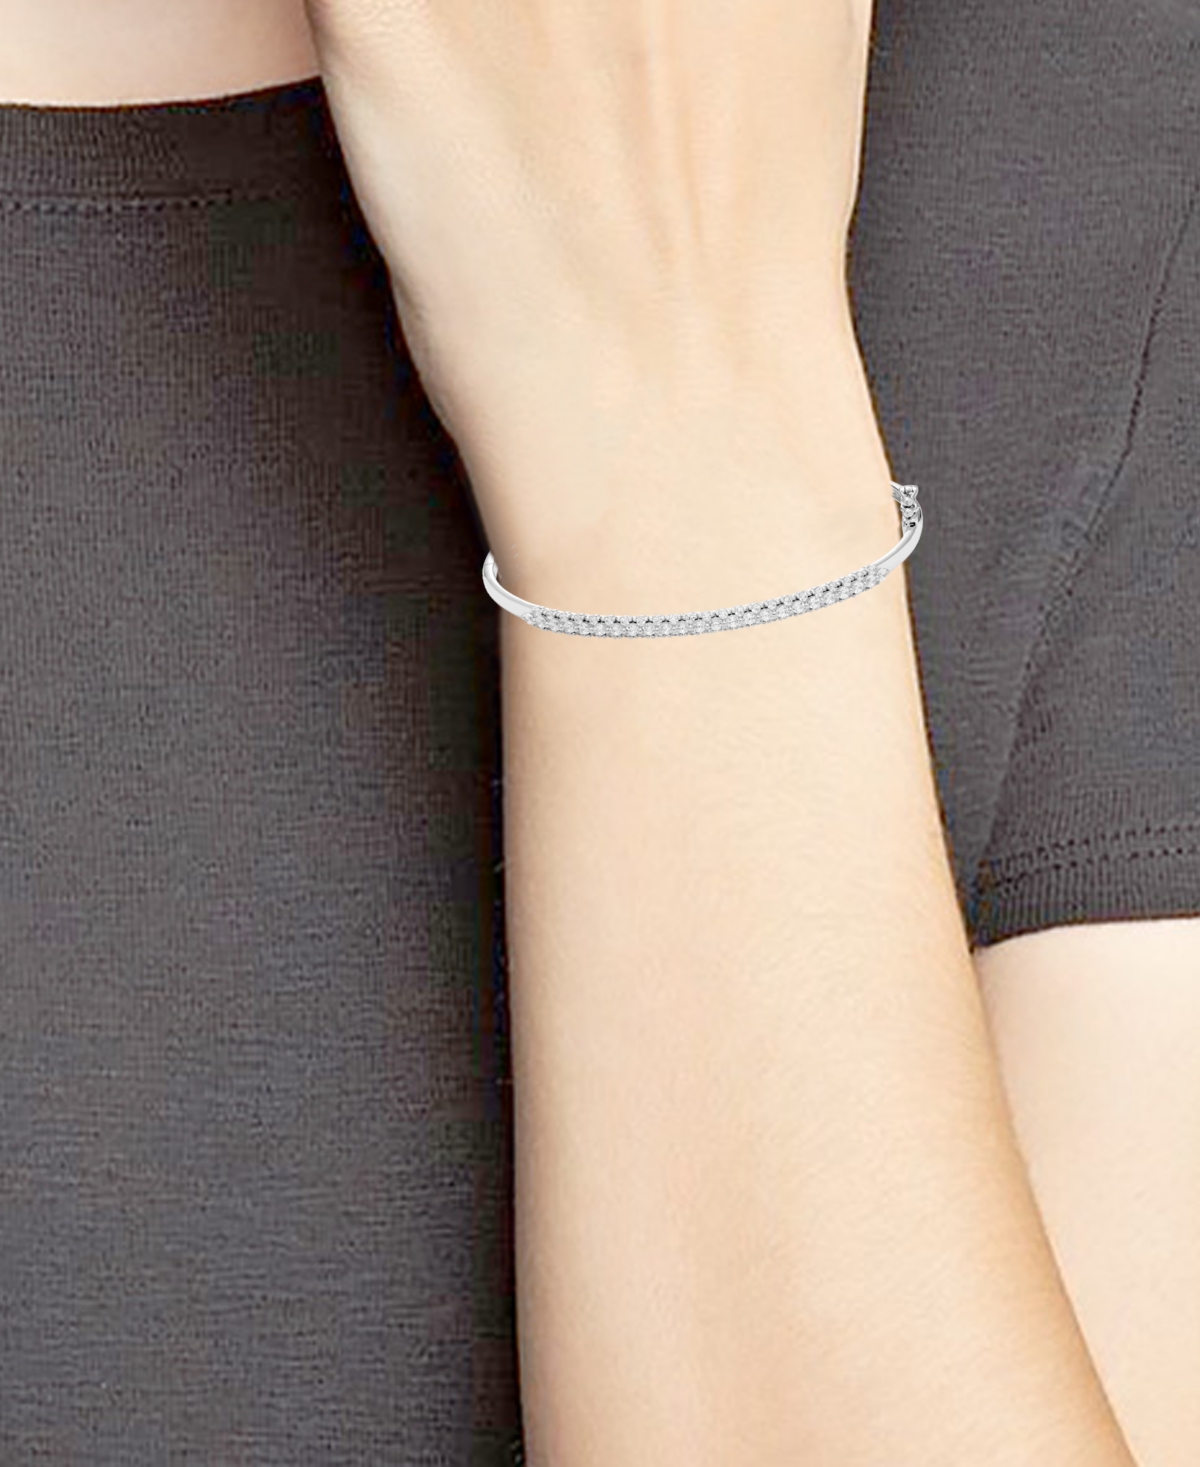 Shop Macy's Diamond Bangle Bracelet (1 Ct. Tw.) In 14k White Gold